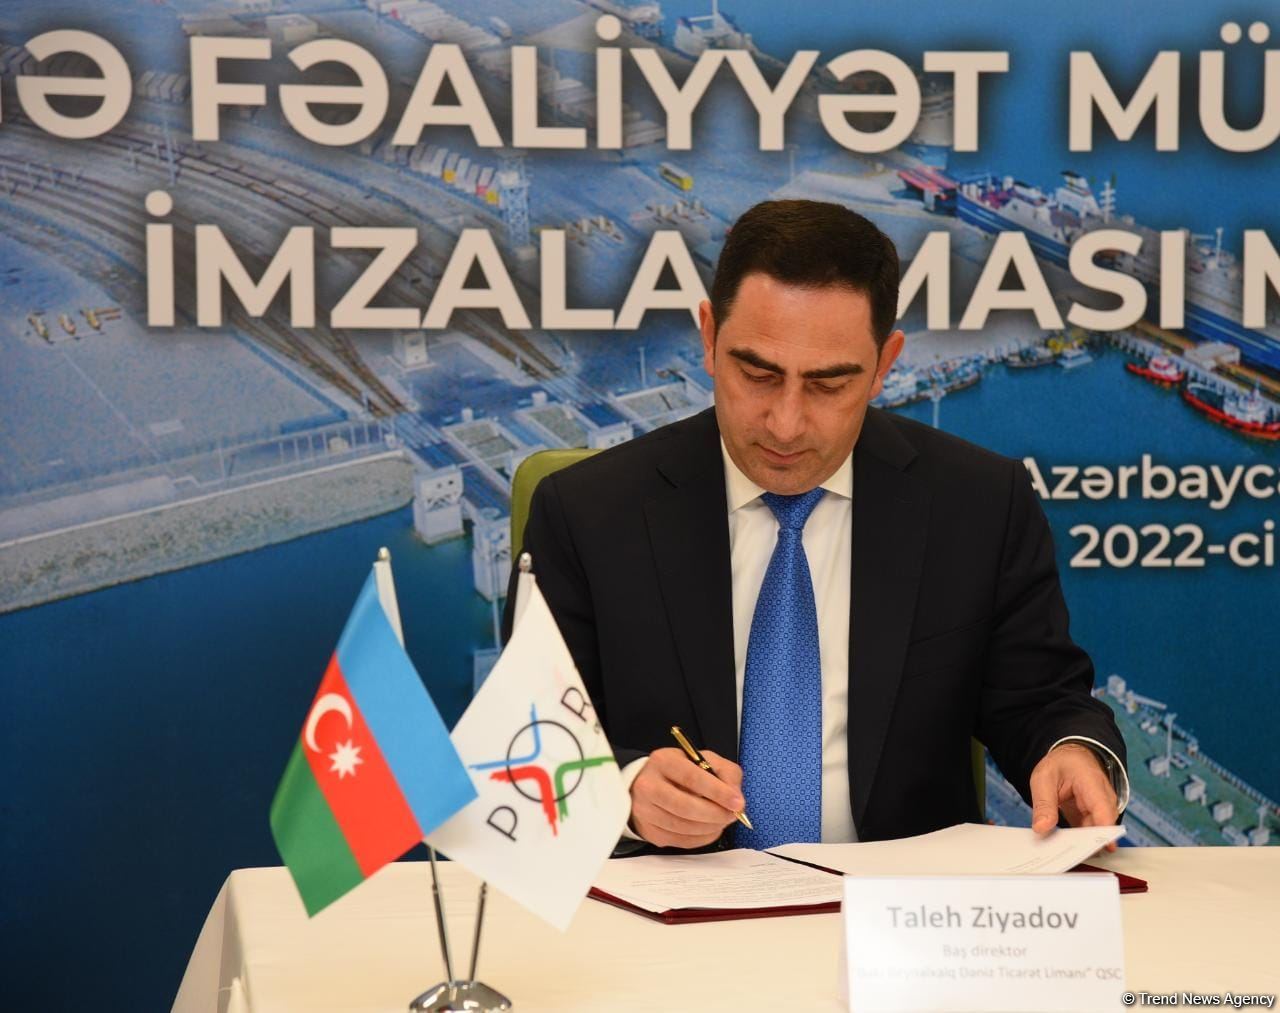 Turkish Albayrak, Port of Baku sign agreement on cooperation (PHOTO)